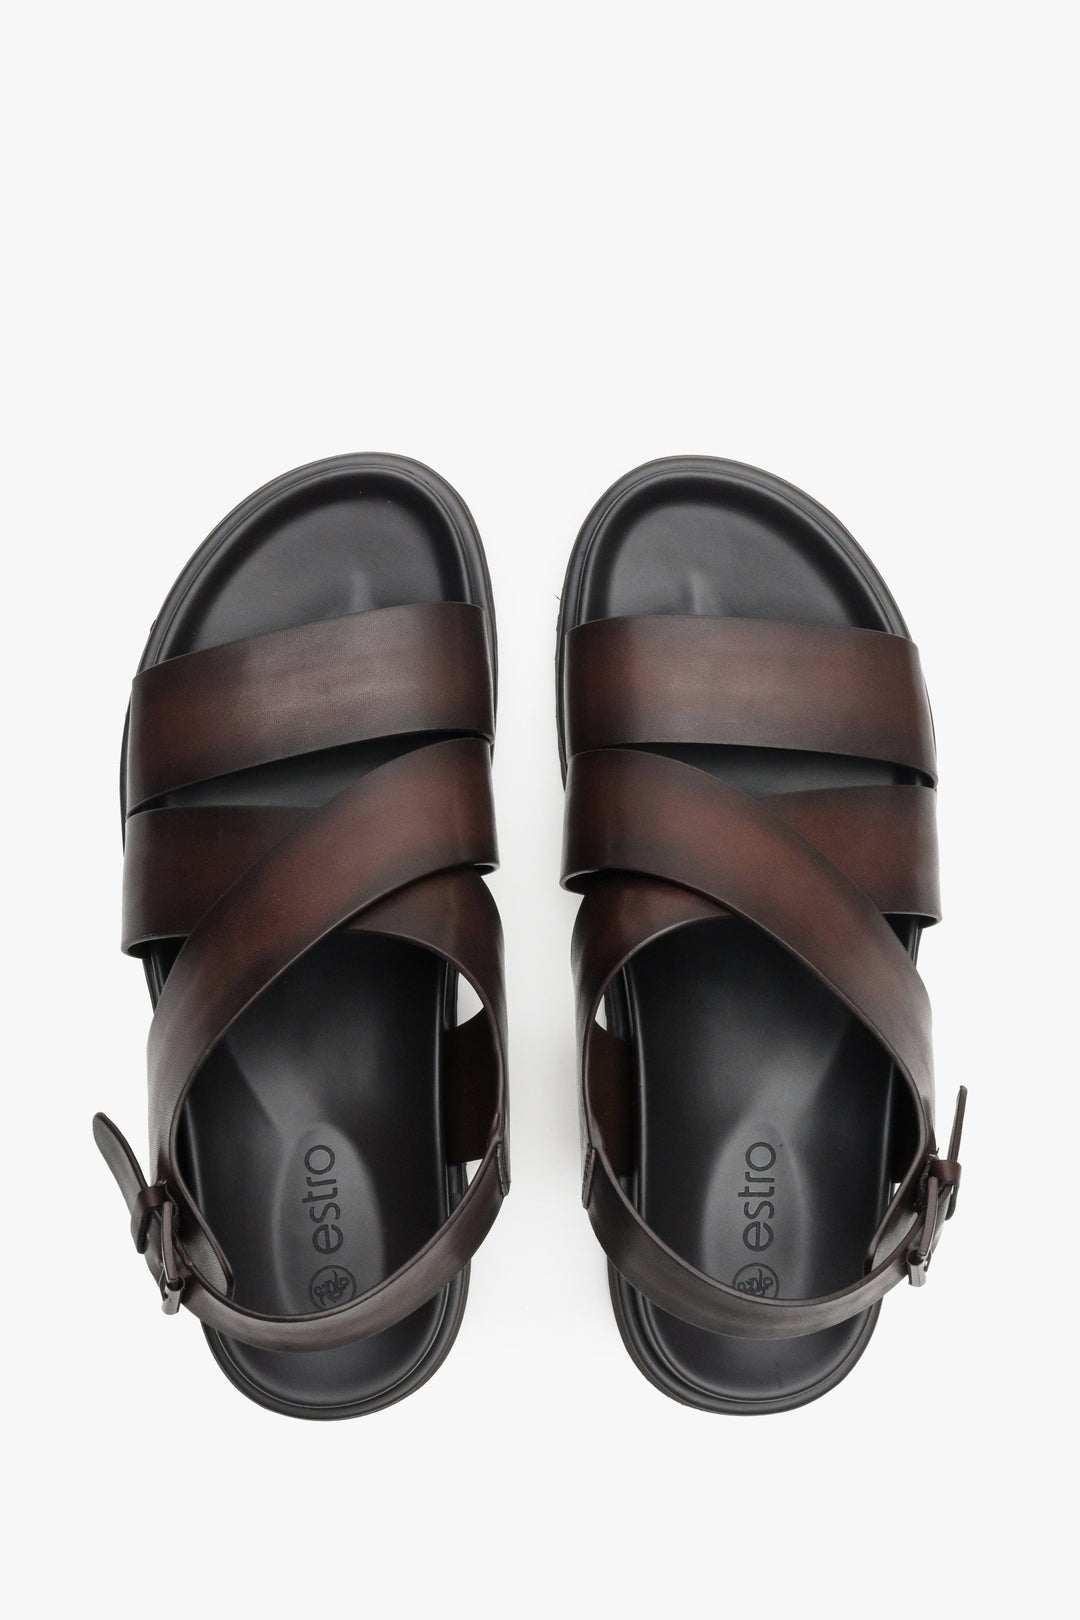 Men's brown leather sandals by Estro - top view model presentation.